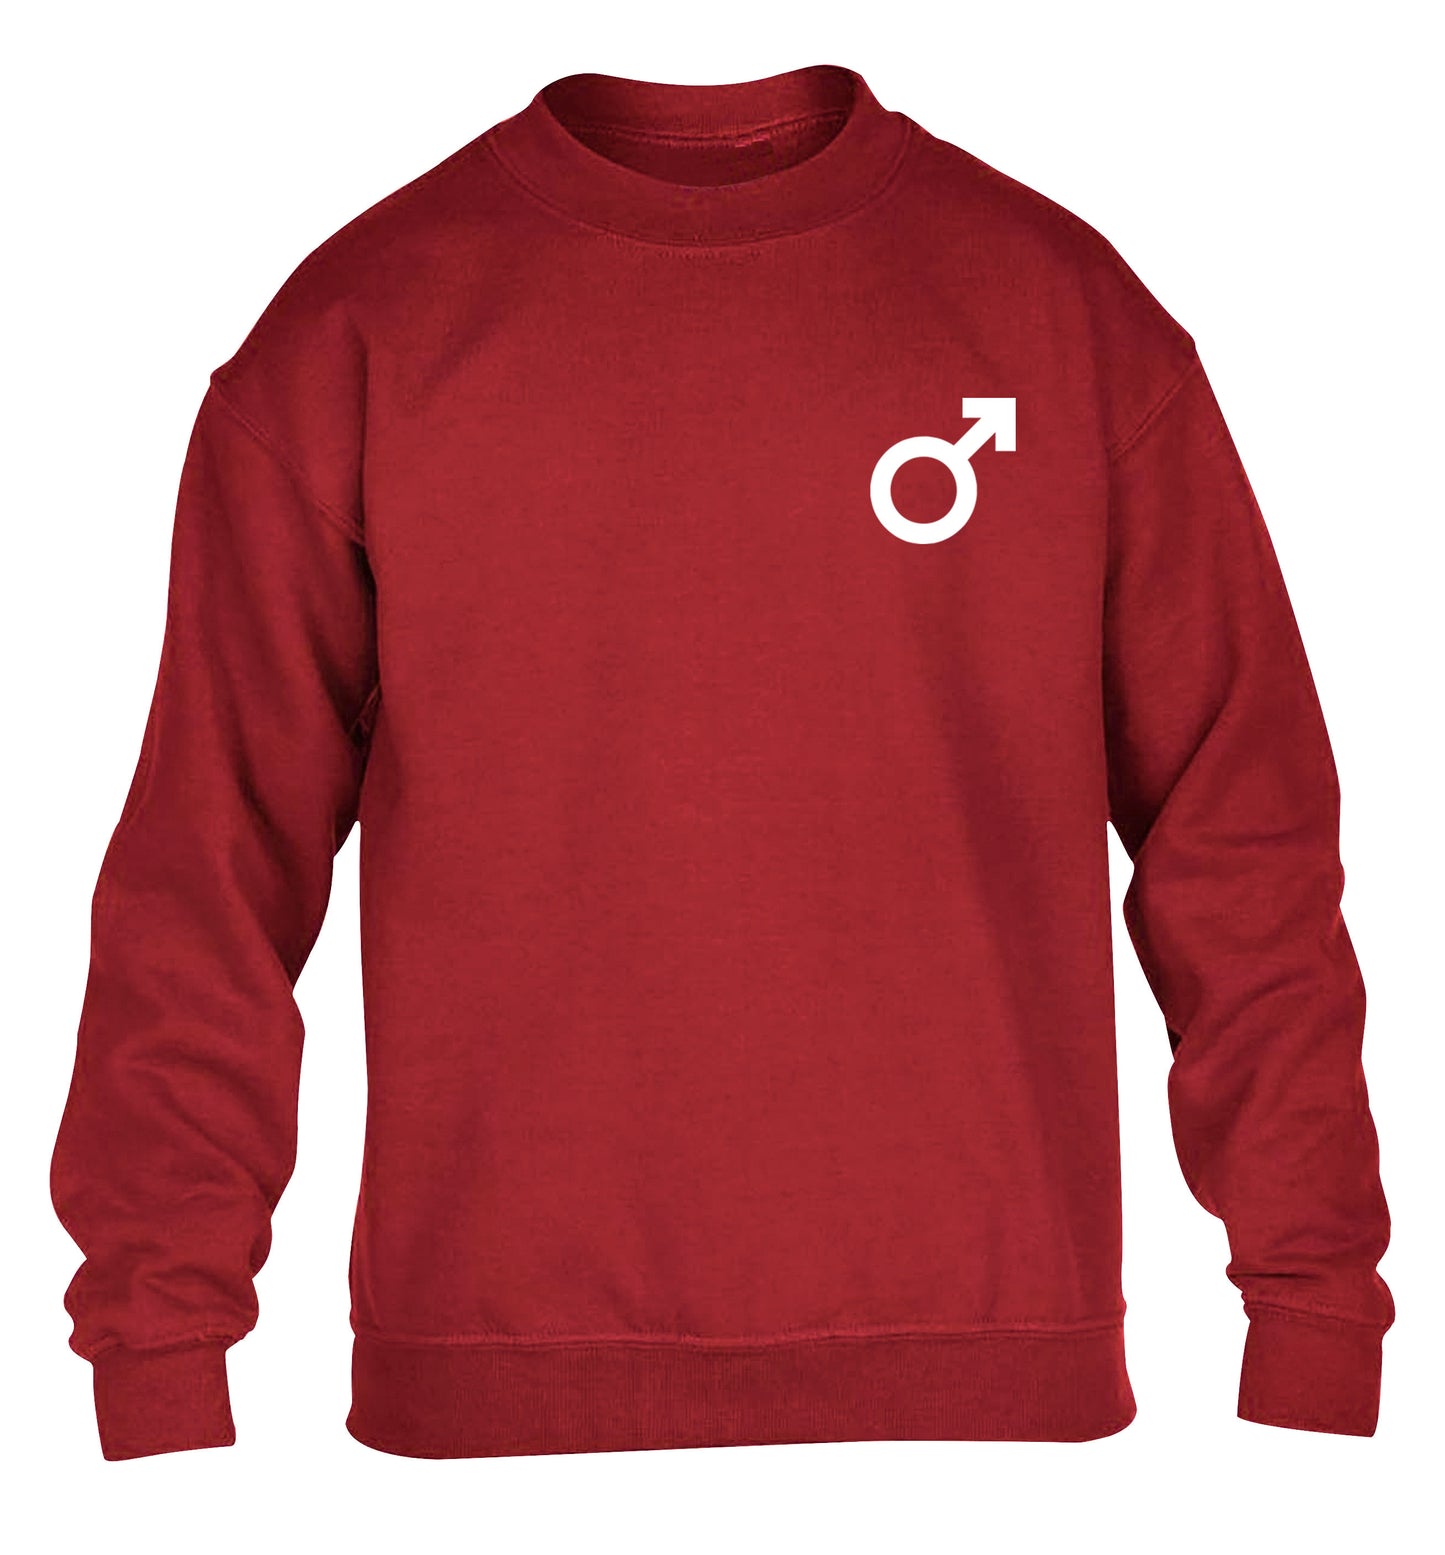 Male symbol pocket children's grey sweater 12-14 Years